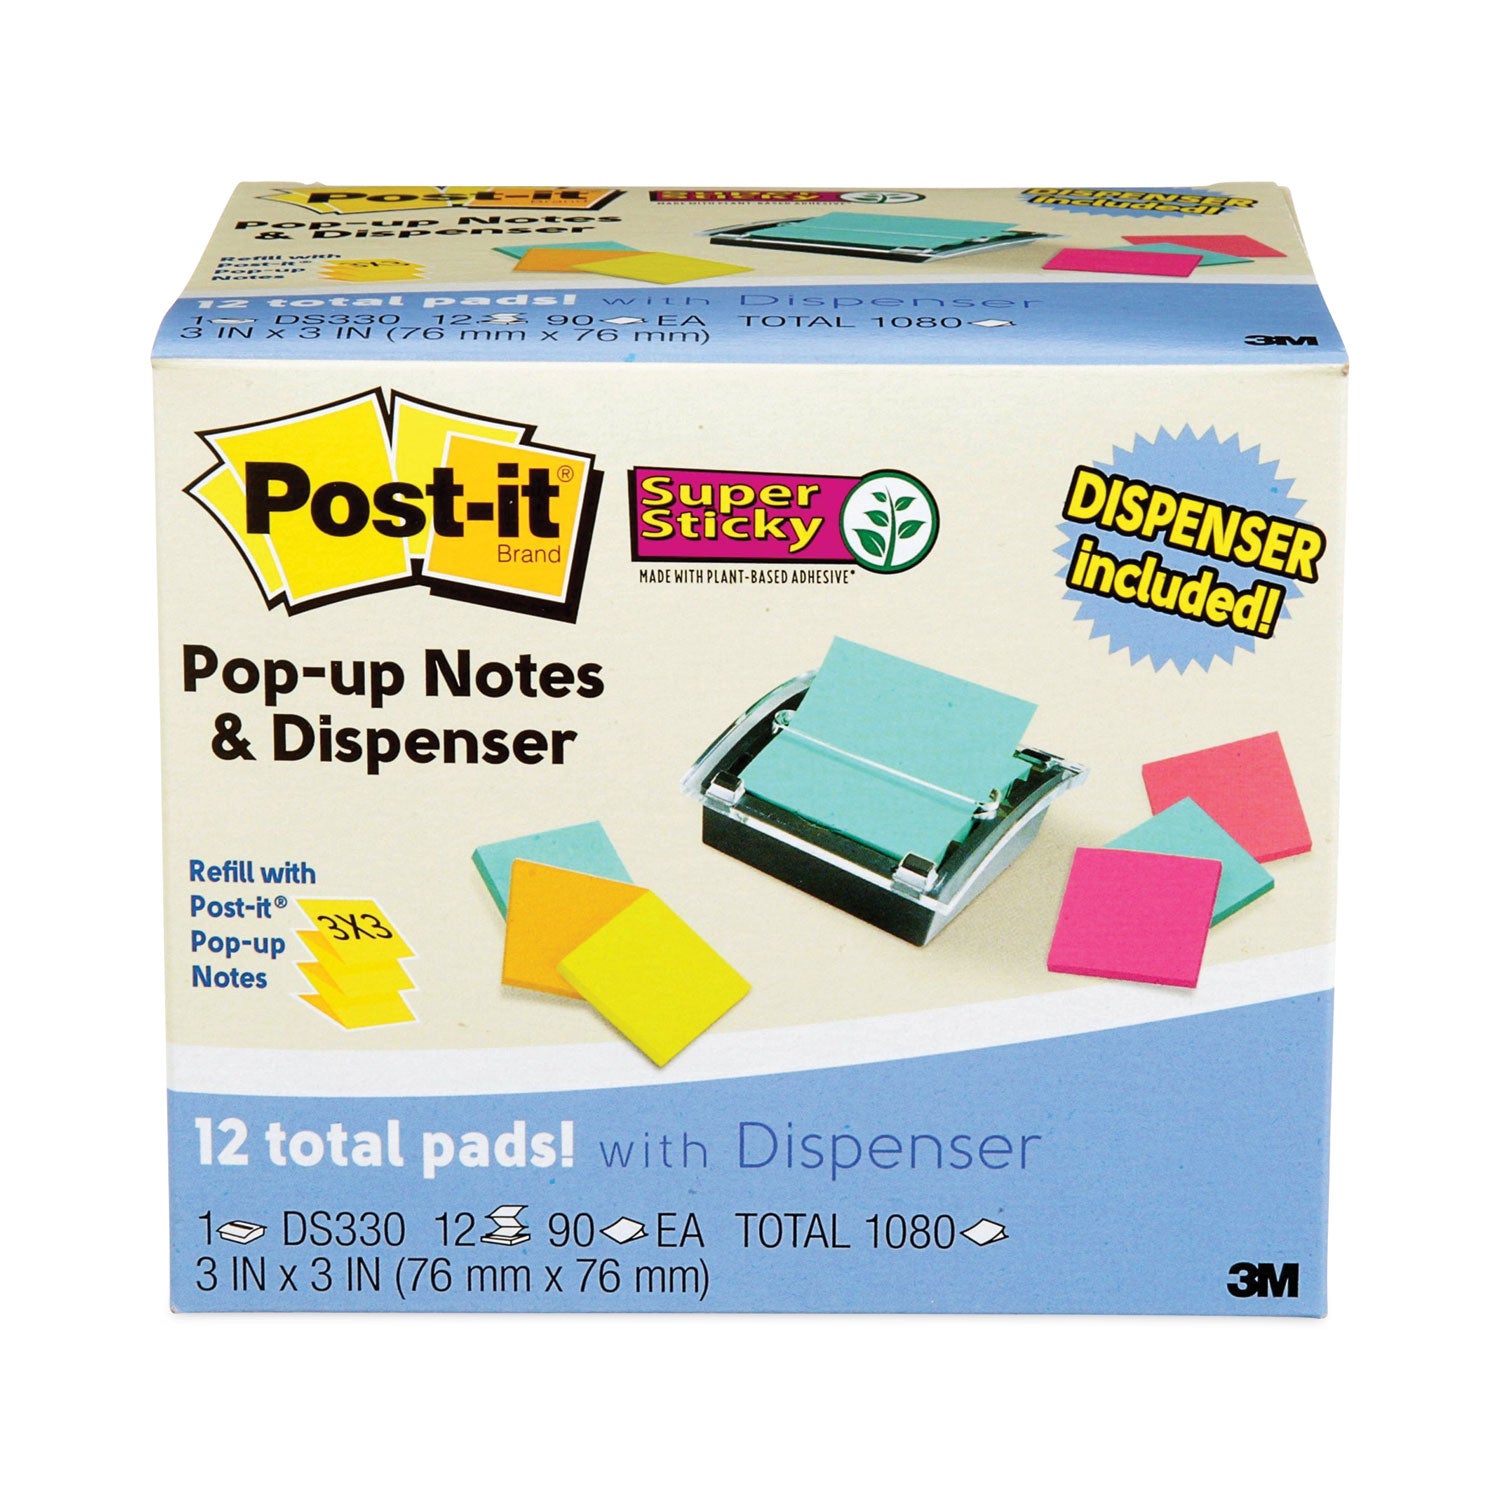 Pop-up Dispenser Value Pack, For 3 x 3 Pads, Black/Clear, Includes (12) Marrakesh Rio de Janeiro Super Sticky Pop-up Pad - 